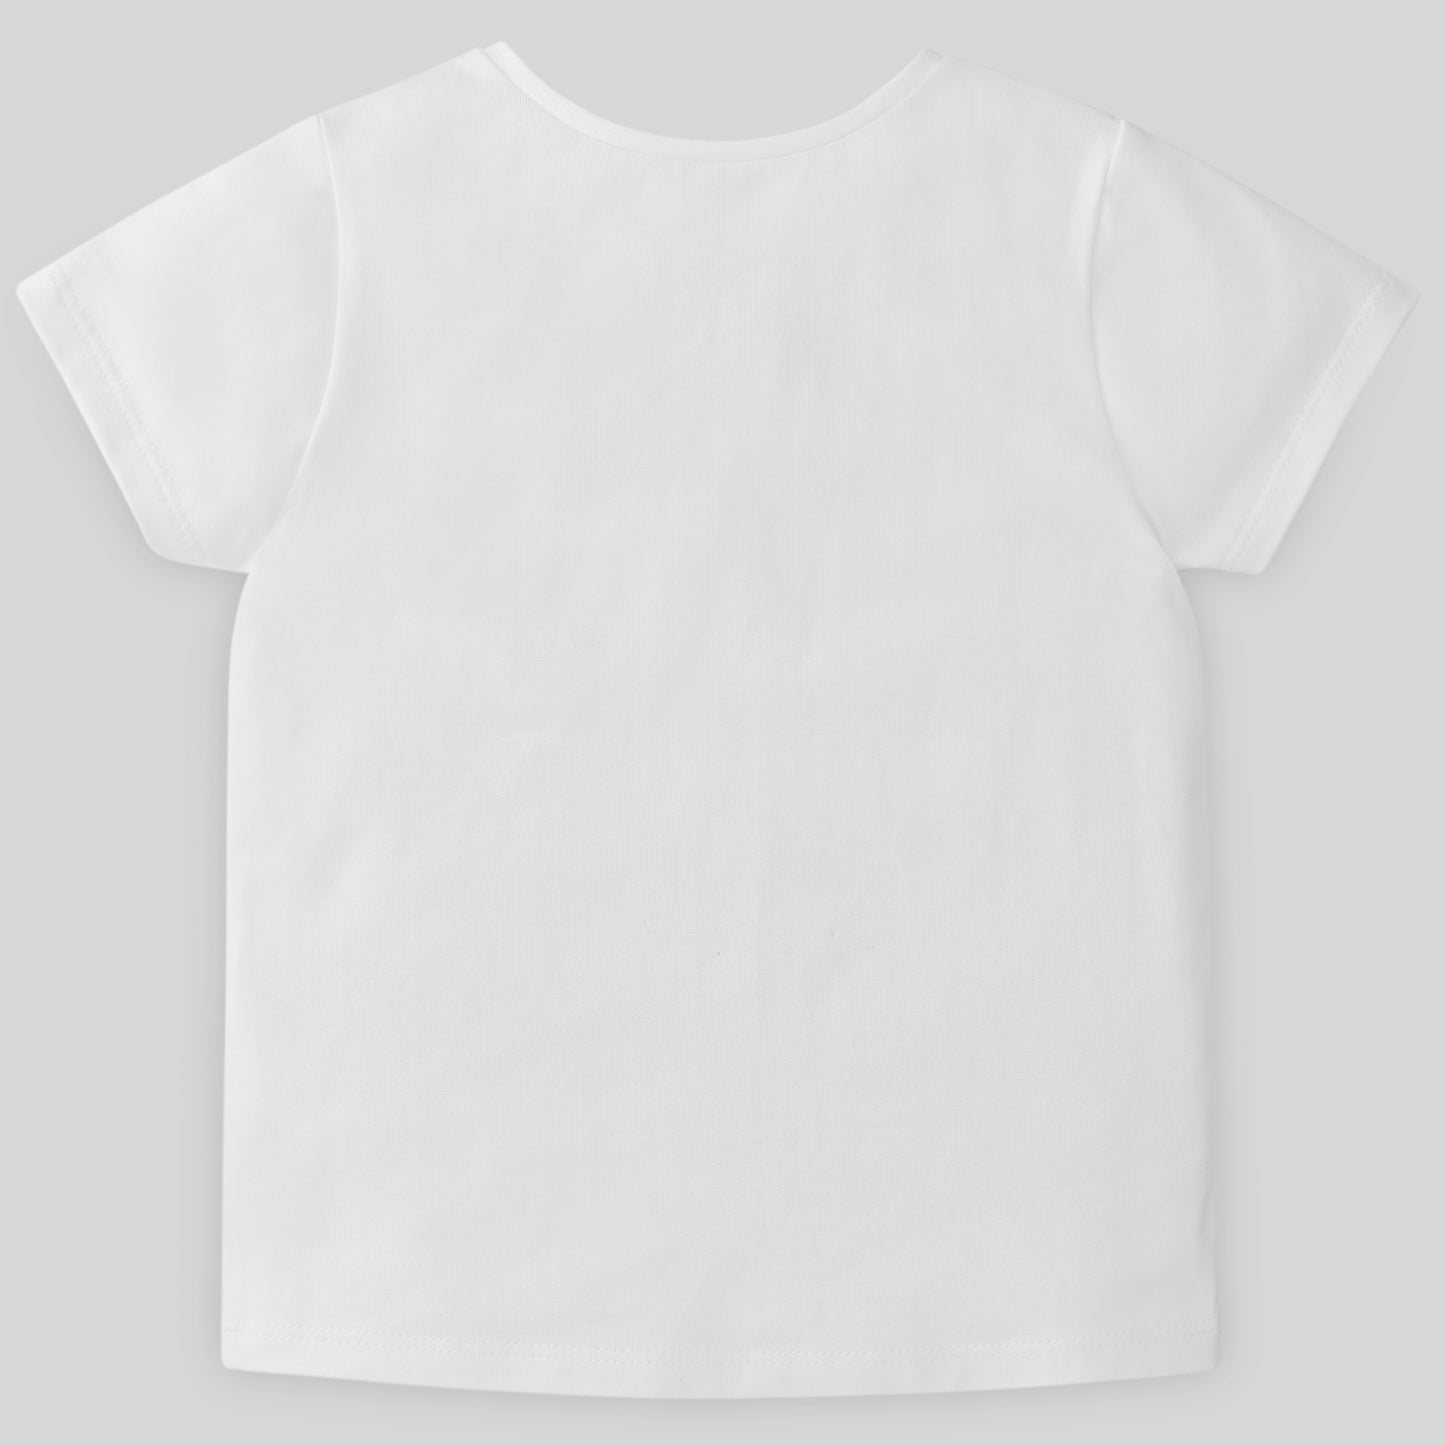 PAZ RODRIGUEZ T-shirt bianca stampa meduse azzurra